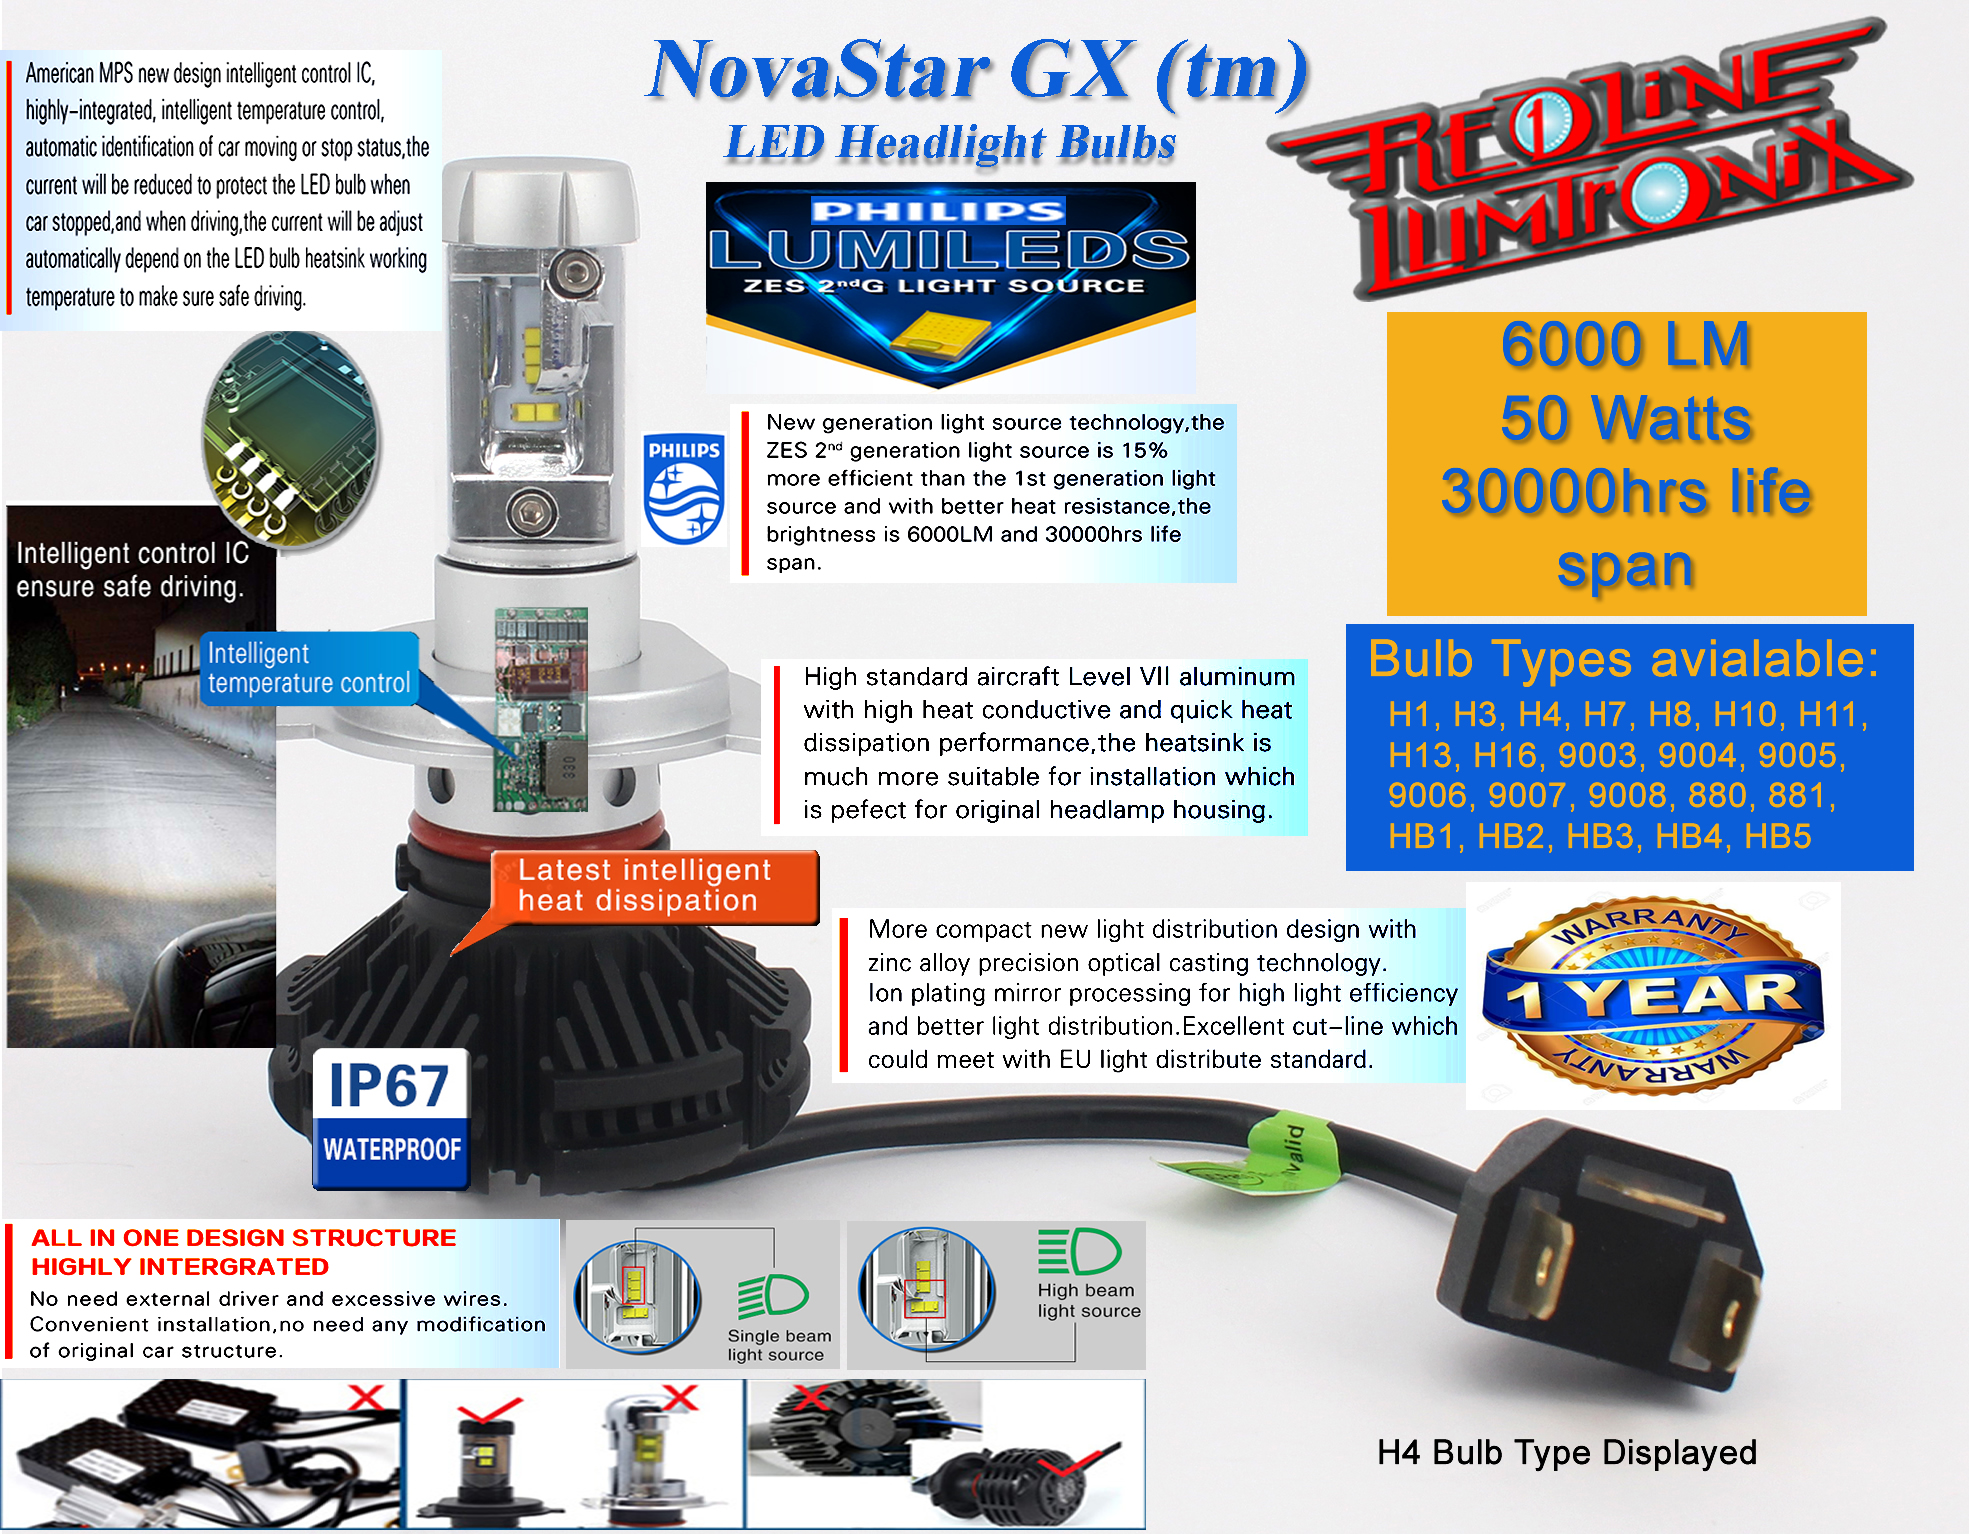 H1 NovaStar GX LED Headlight Bulb 6000 Lumens (One Pair) (BU-015) – RedLine  LumTronix Inc.